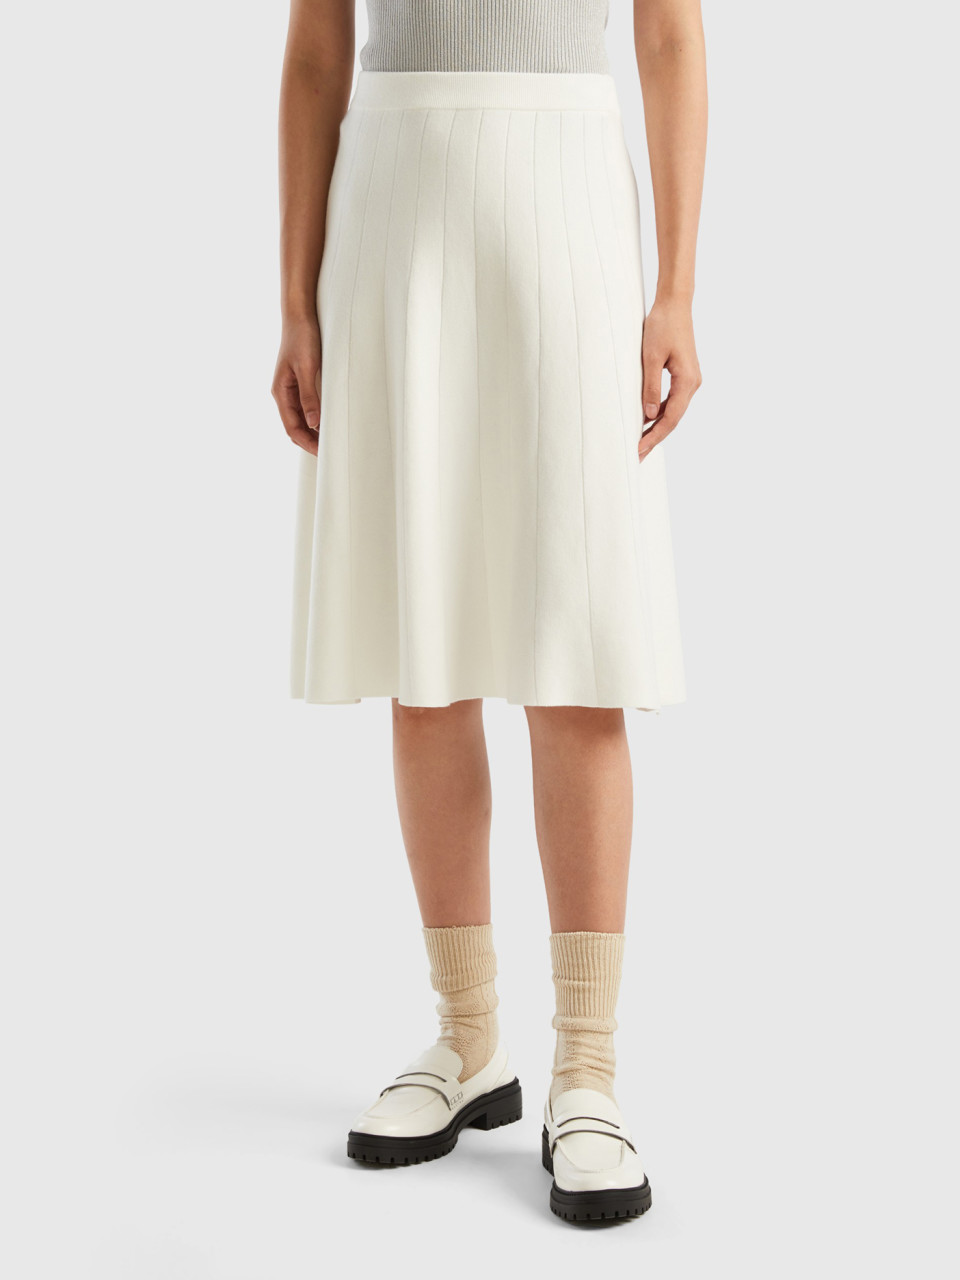 Benetton, Knit Pencil Skirt, Creamy White, Women